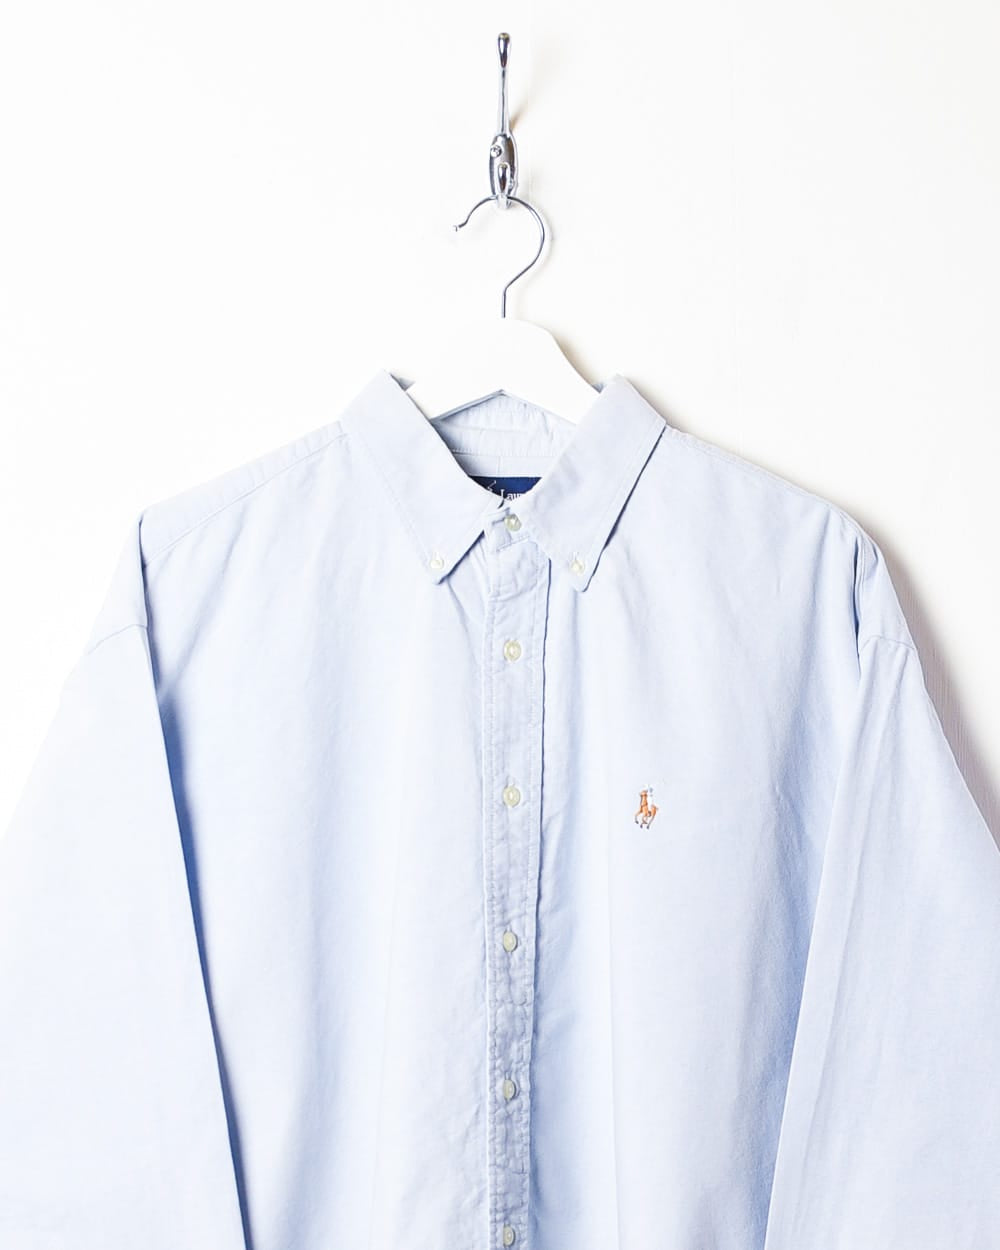 BabyBlue Polo Ralph Lauren Yarmouth Shirt - X-Large